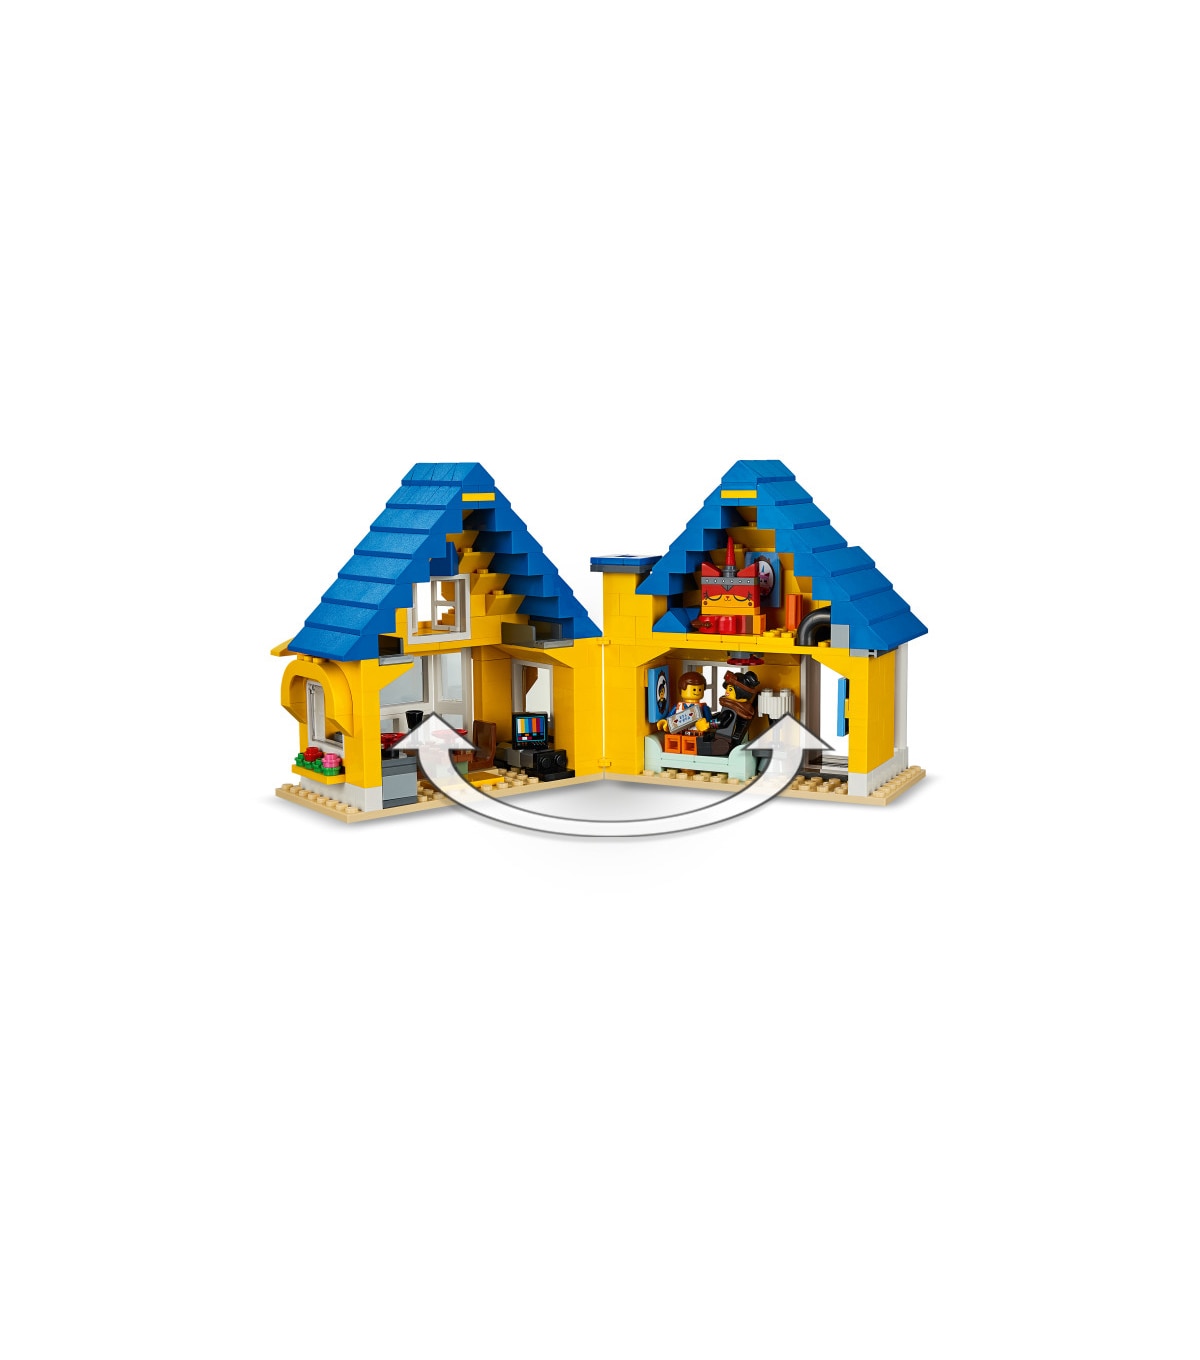 emmet's dream house lego set